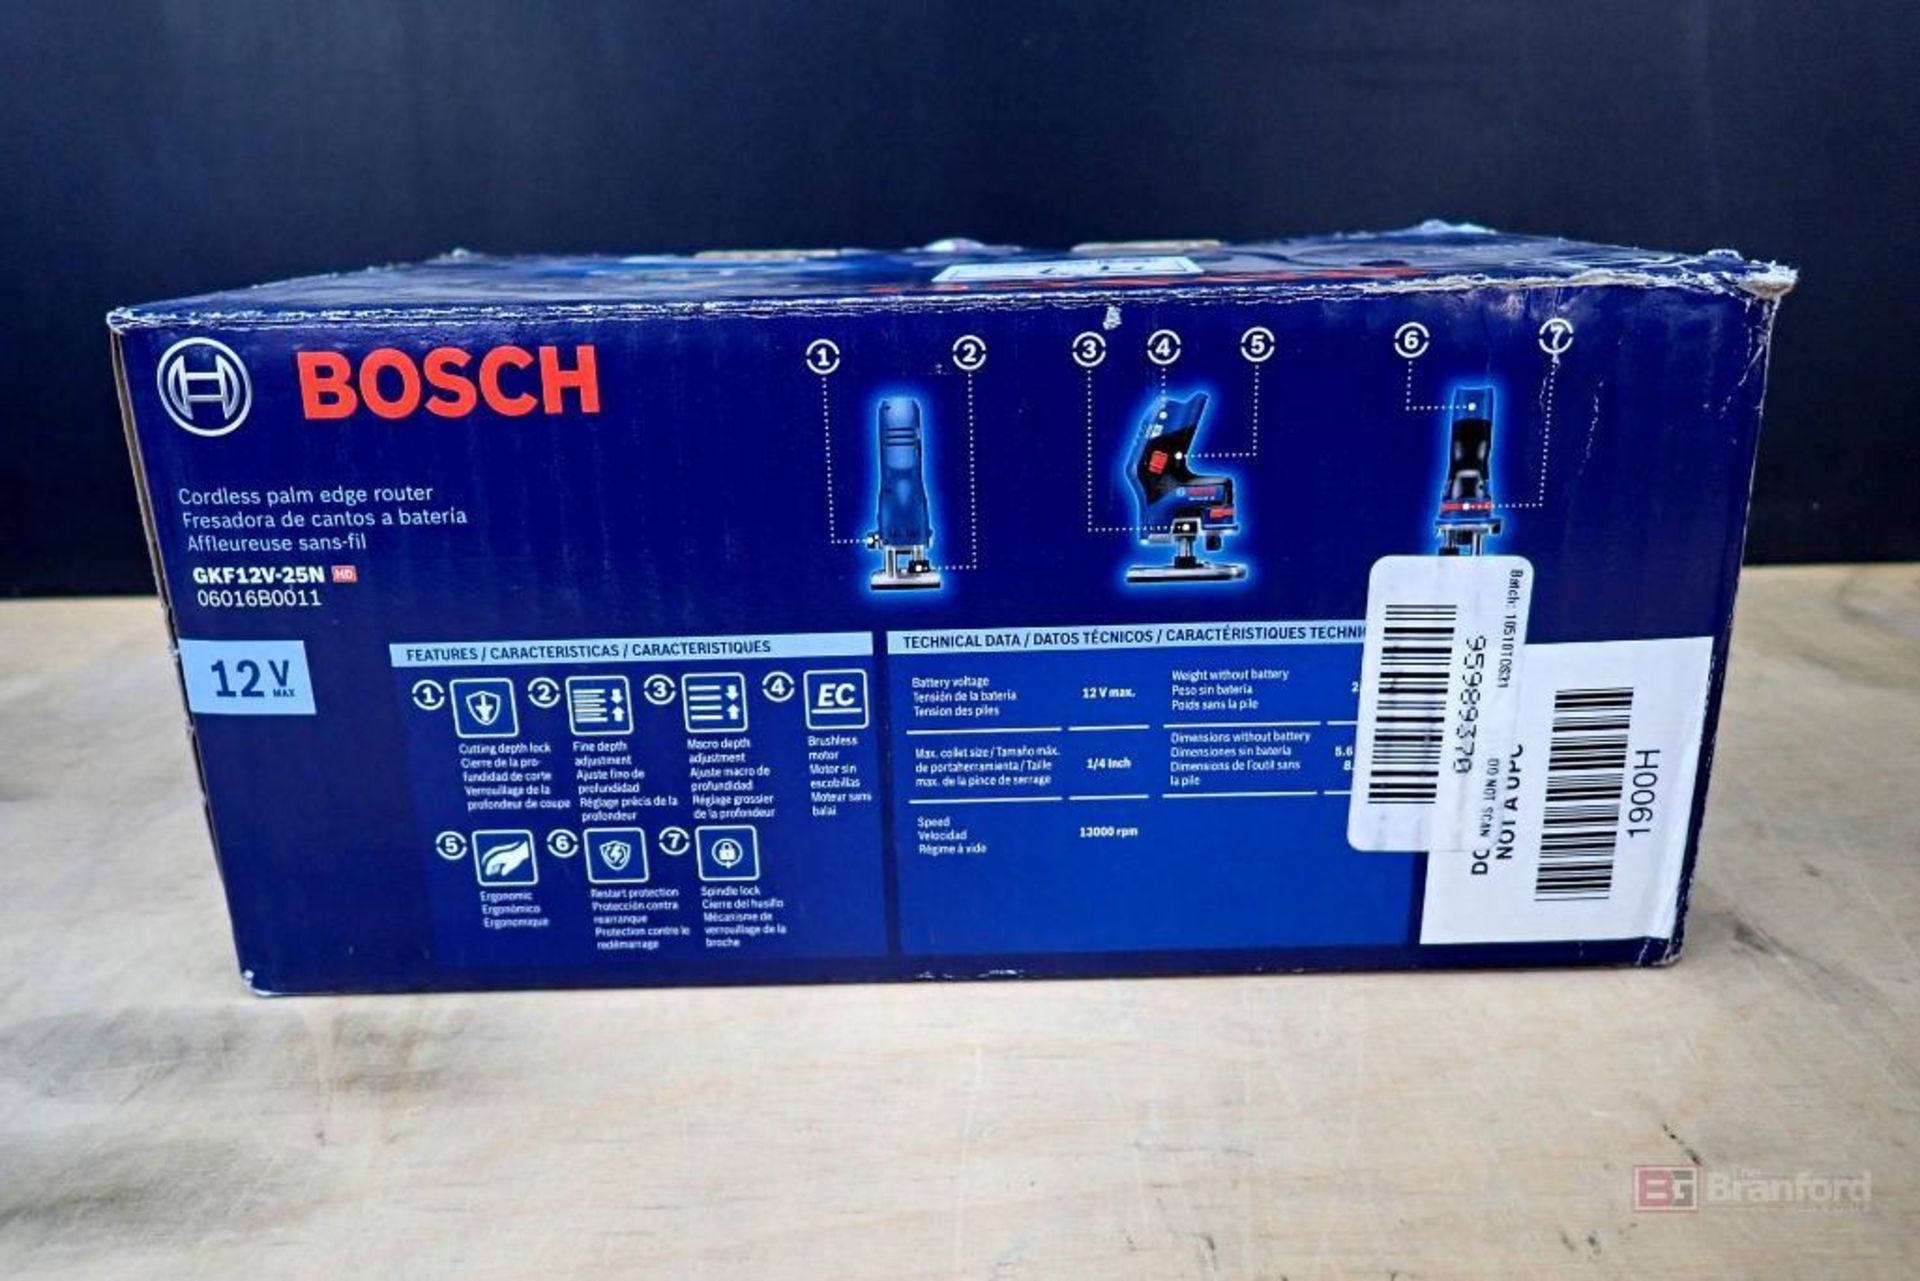 Bosch 12V Max GKF12V-25N Cordless Palm Edge Router - Image 4 of 8